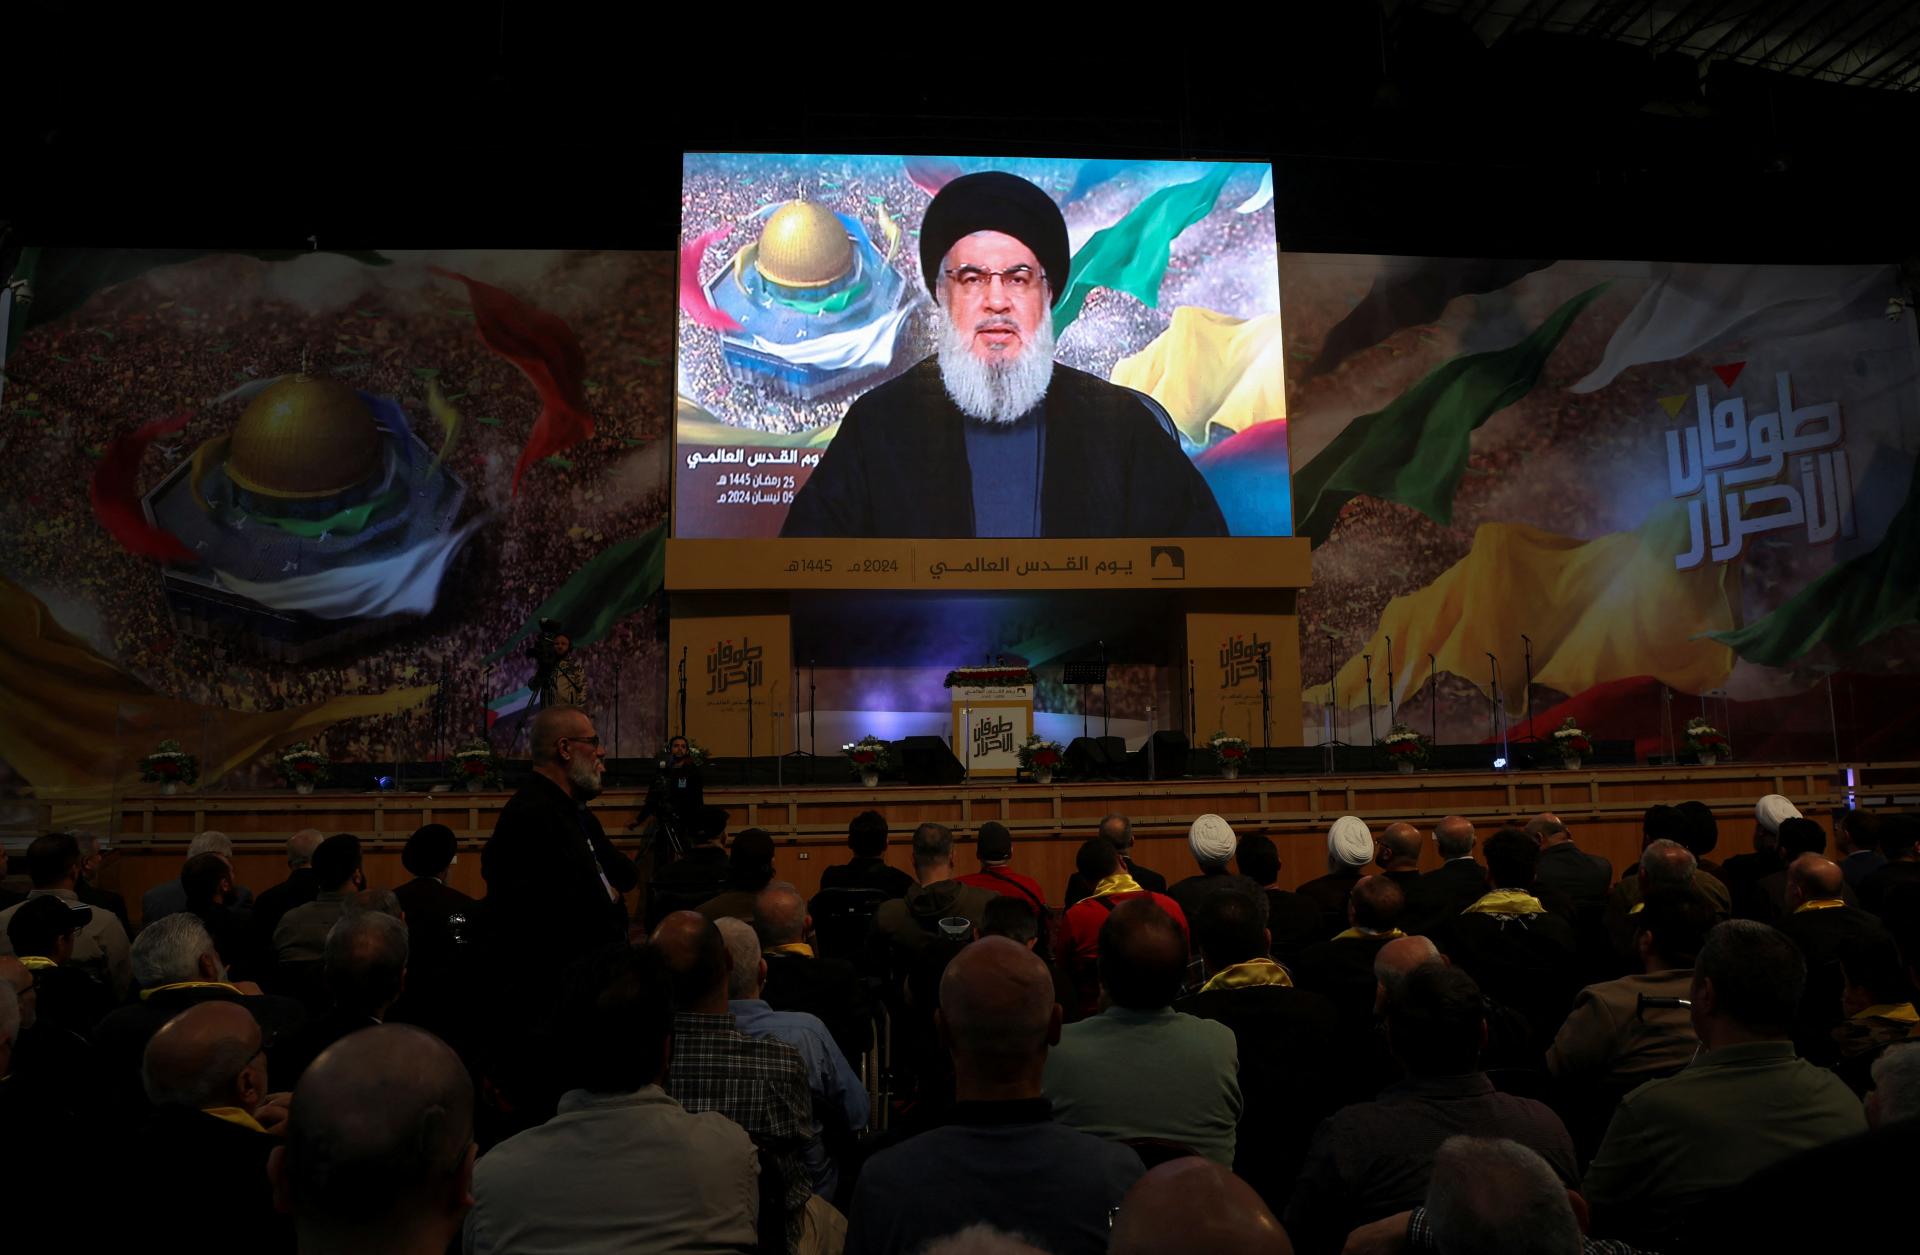 Úder Izraela na iránsky konzulát je bod obratu od 7. októbra, vyhlásil šéf Hizballáhu